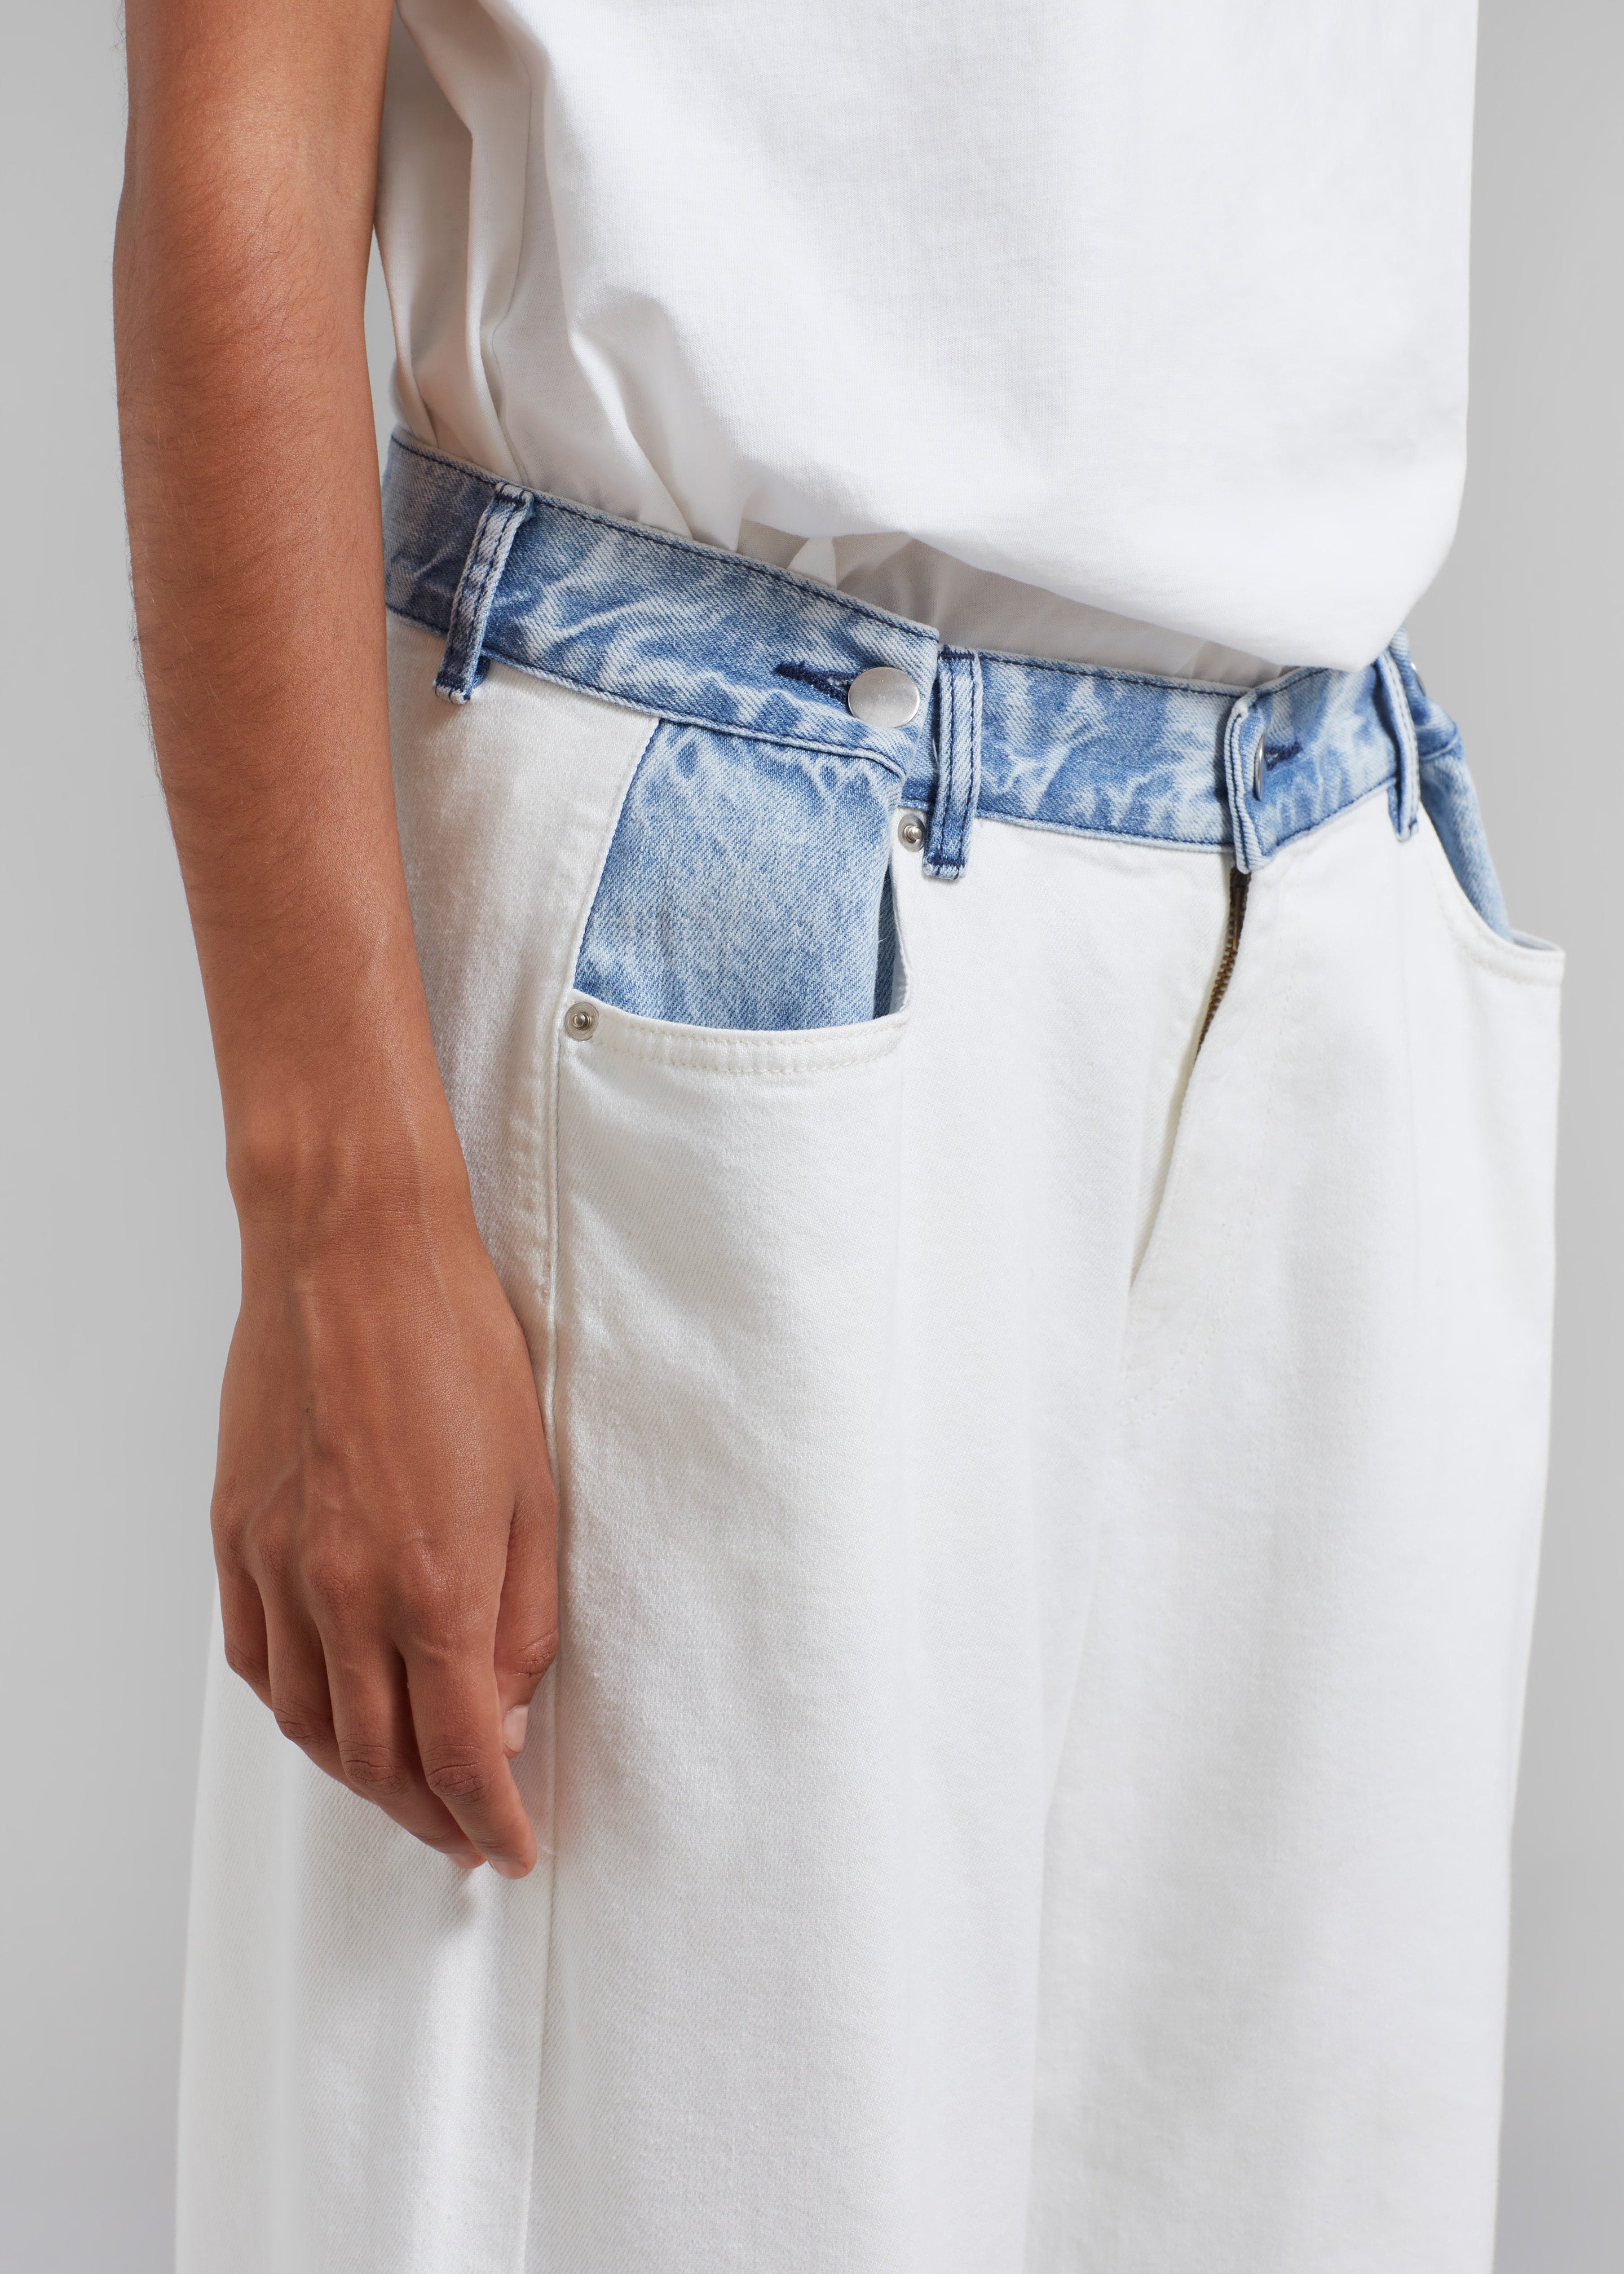 Hayla Contrast Denim Pants - Off White/Blue - 7